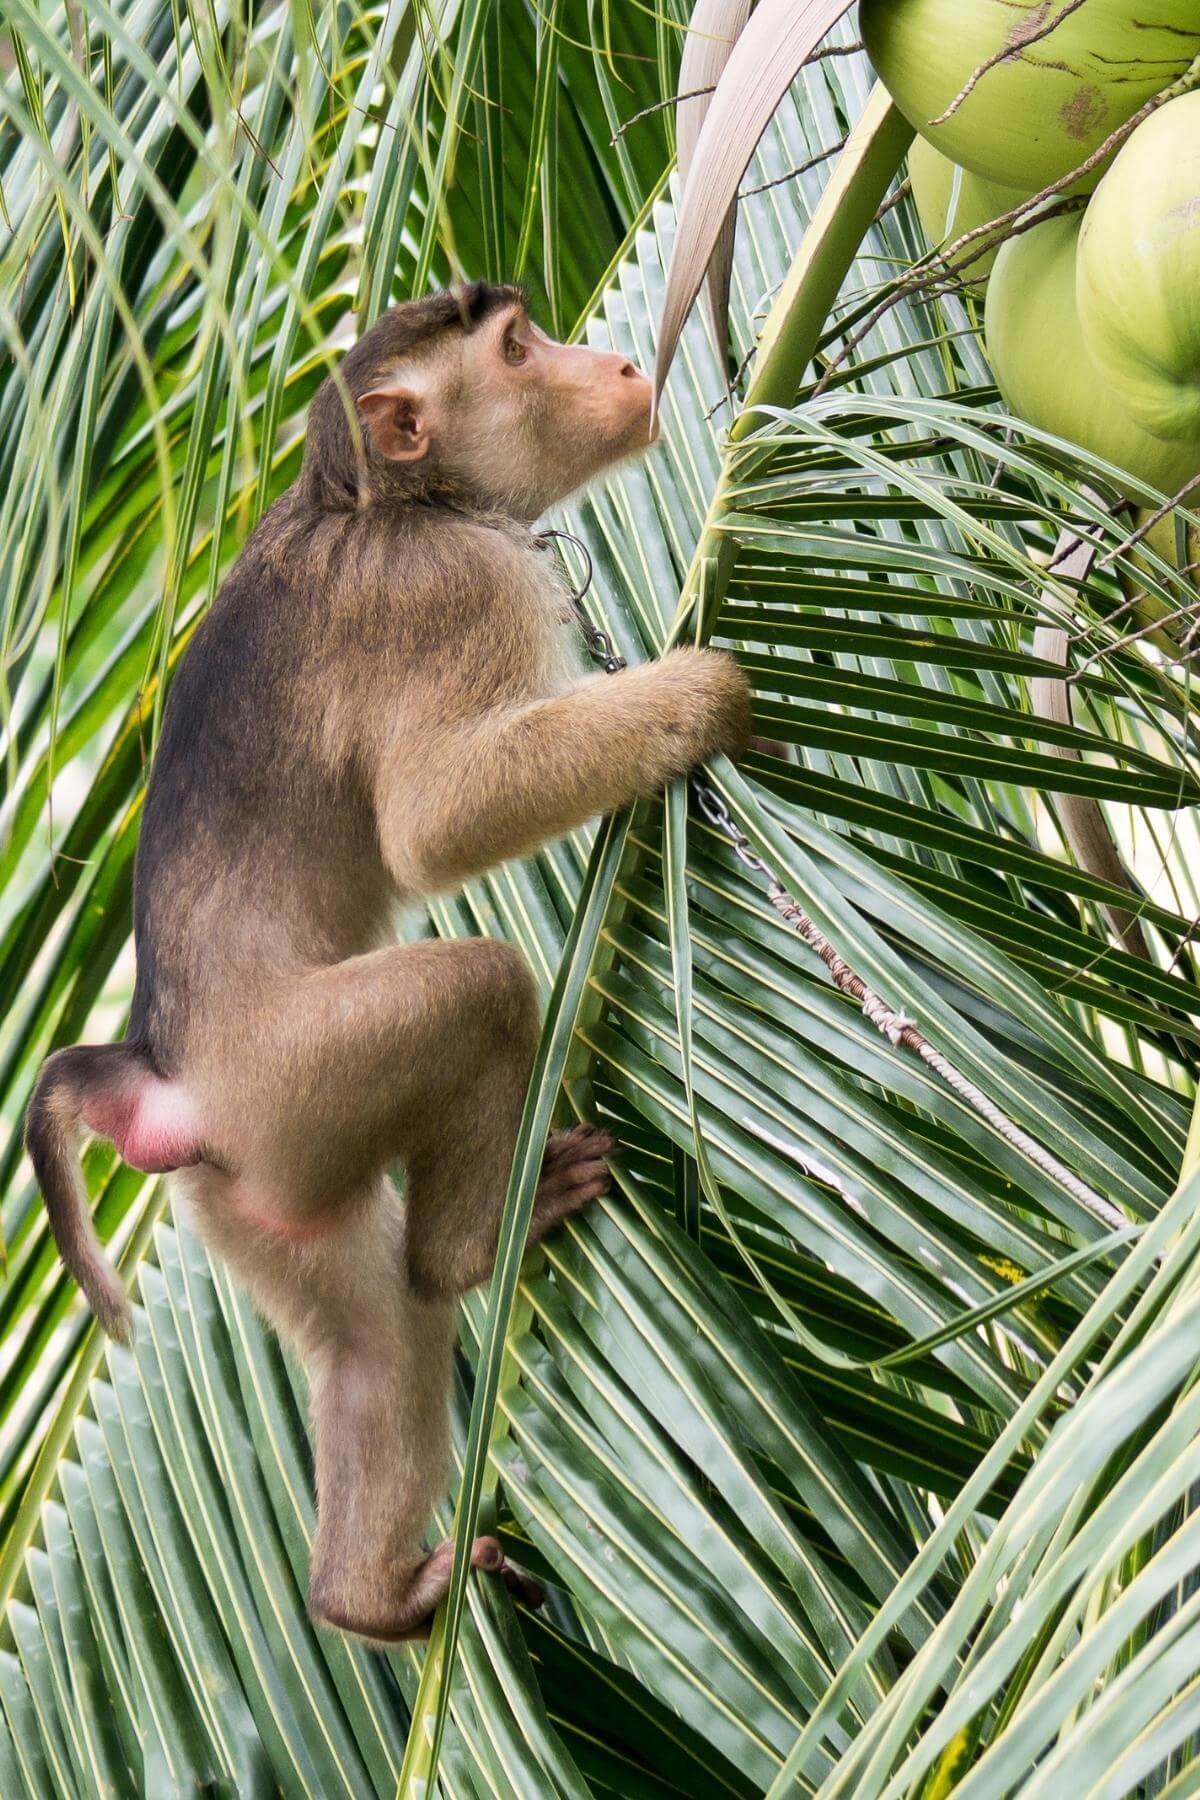 A monkey climbing a tree to pick coconuts.